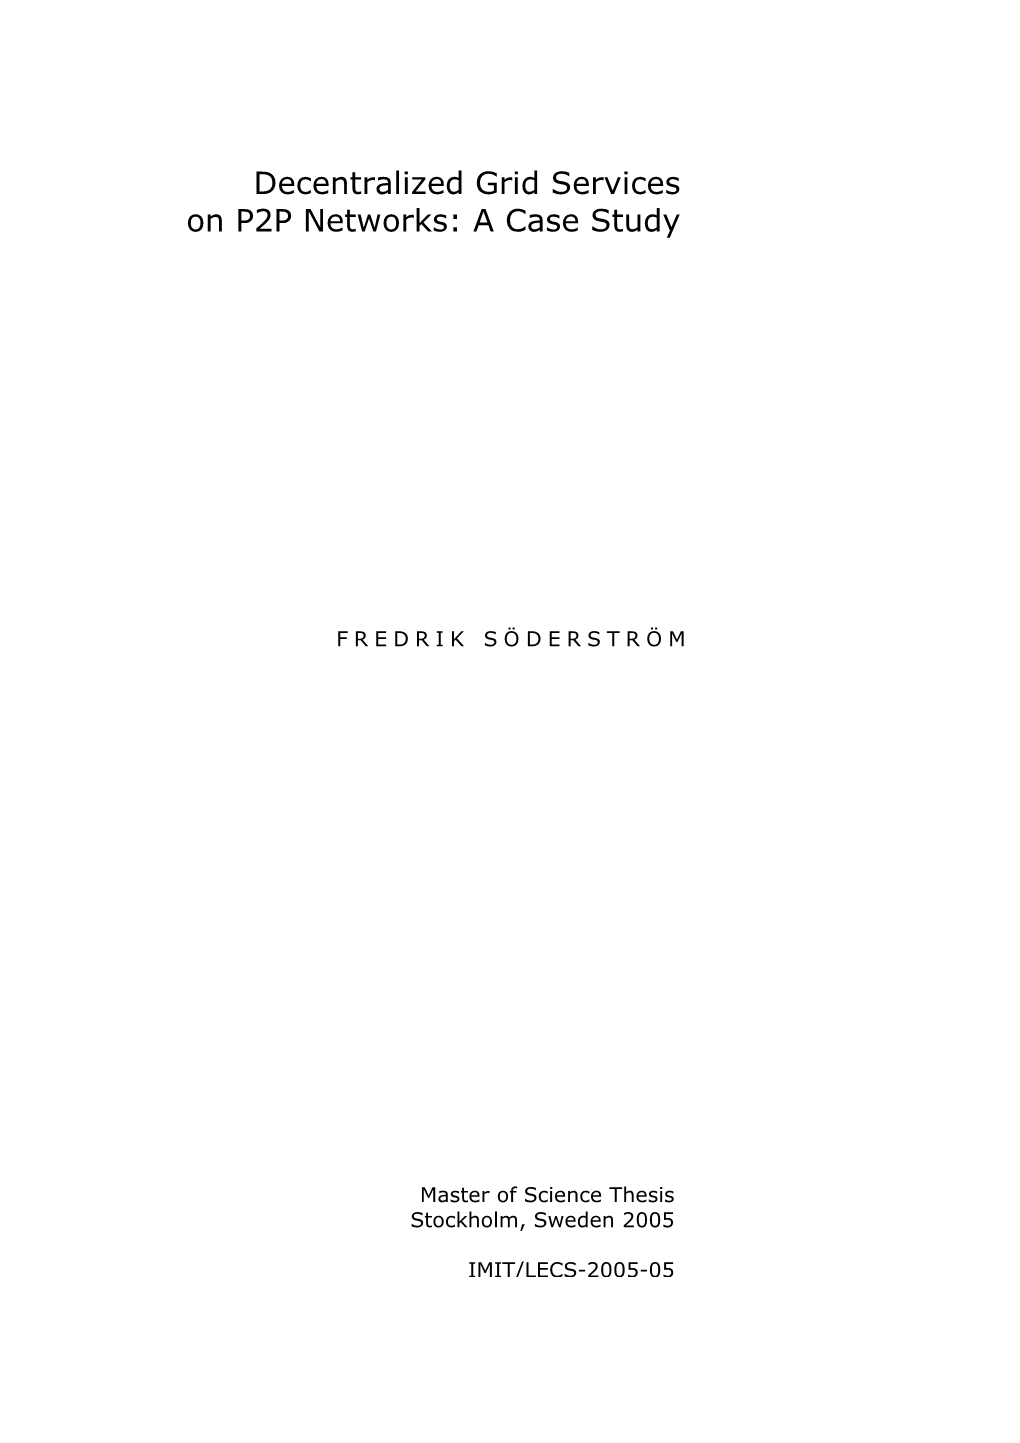 Decentralized Grid Services on P2P Networks: a Case Study